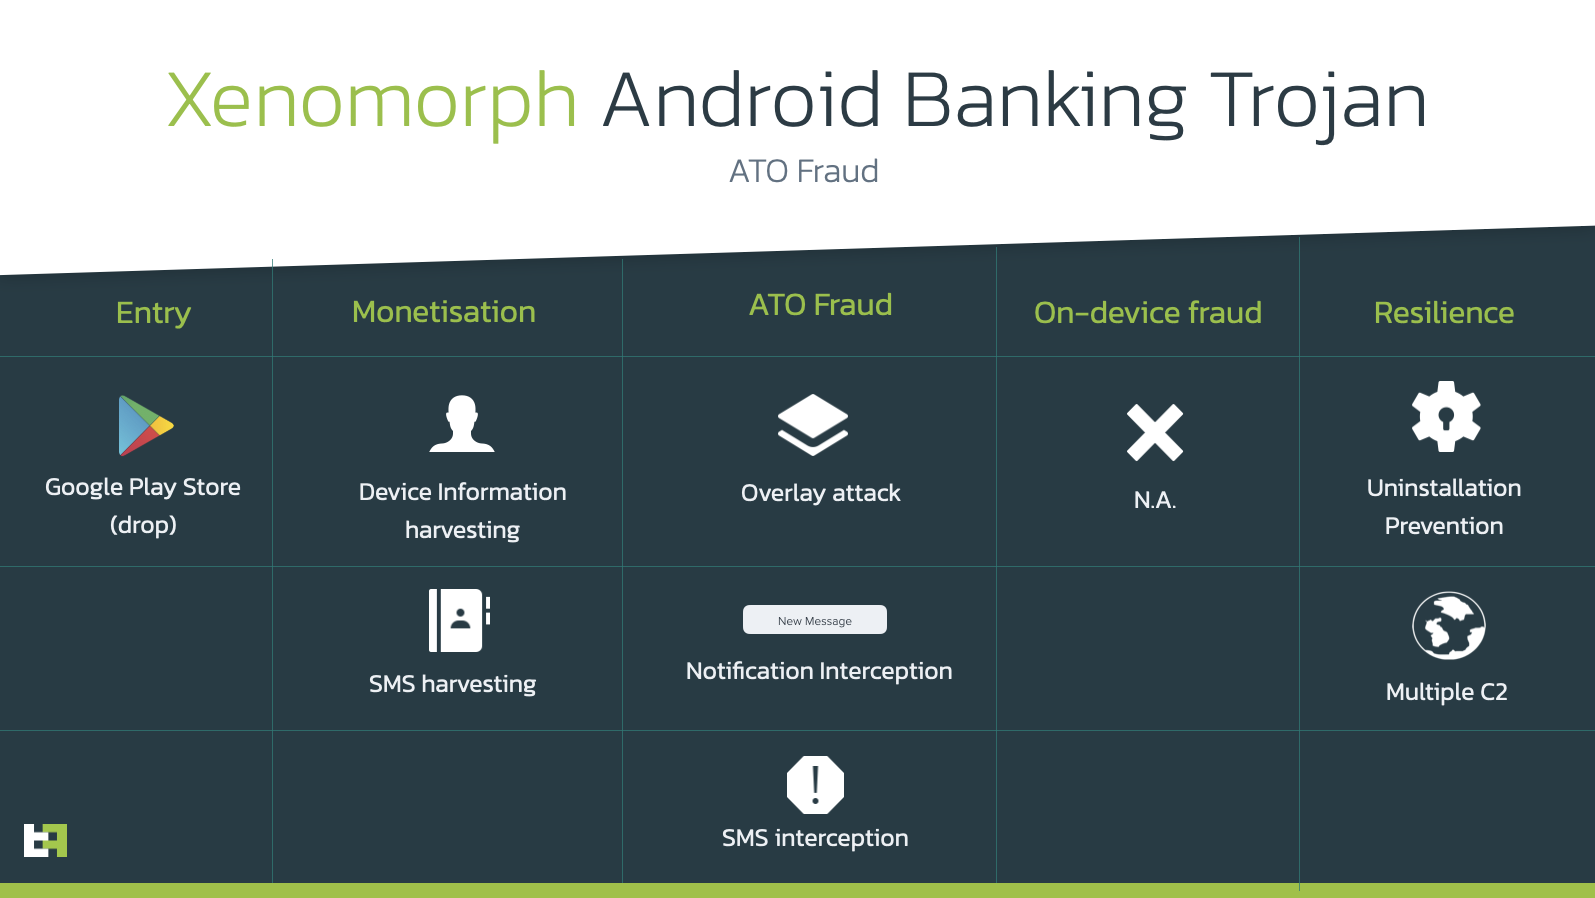 A comprehensive list of the Xenomorph banking app malware's capabilities.